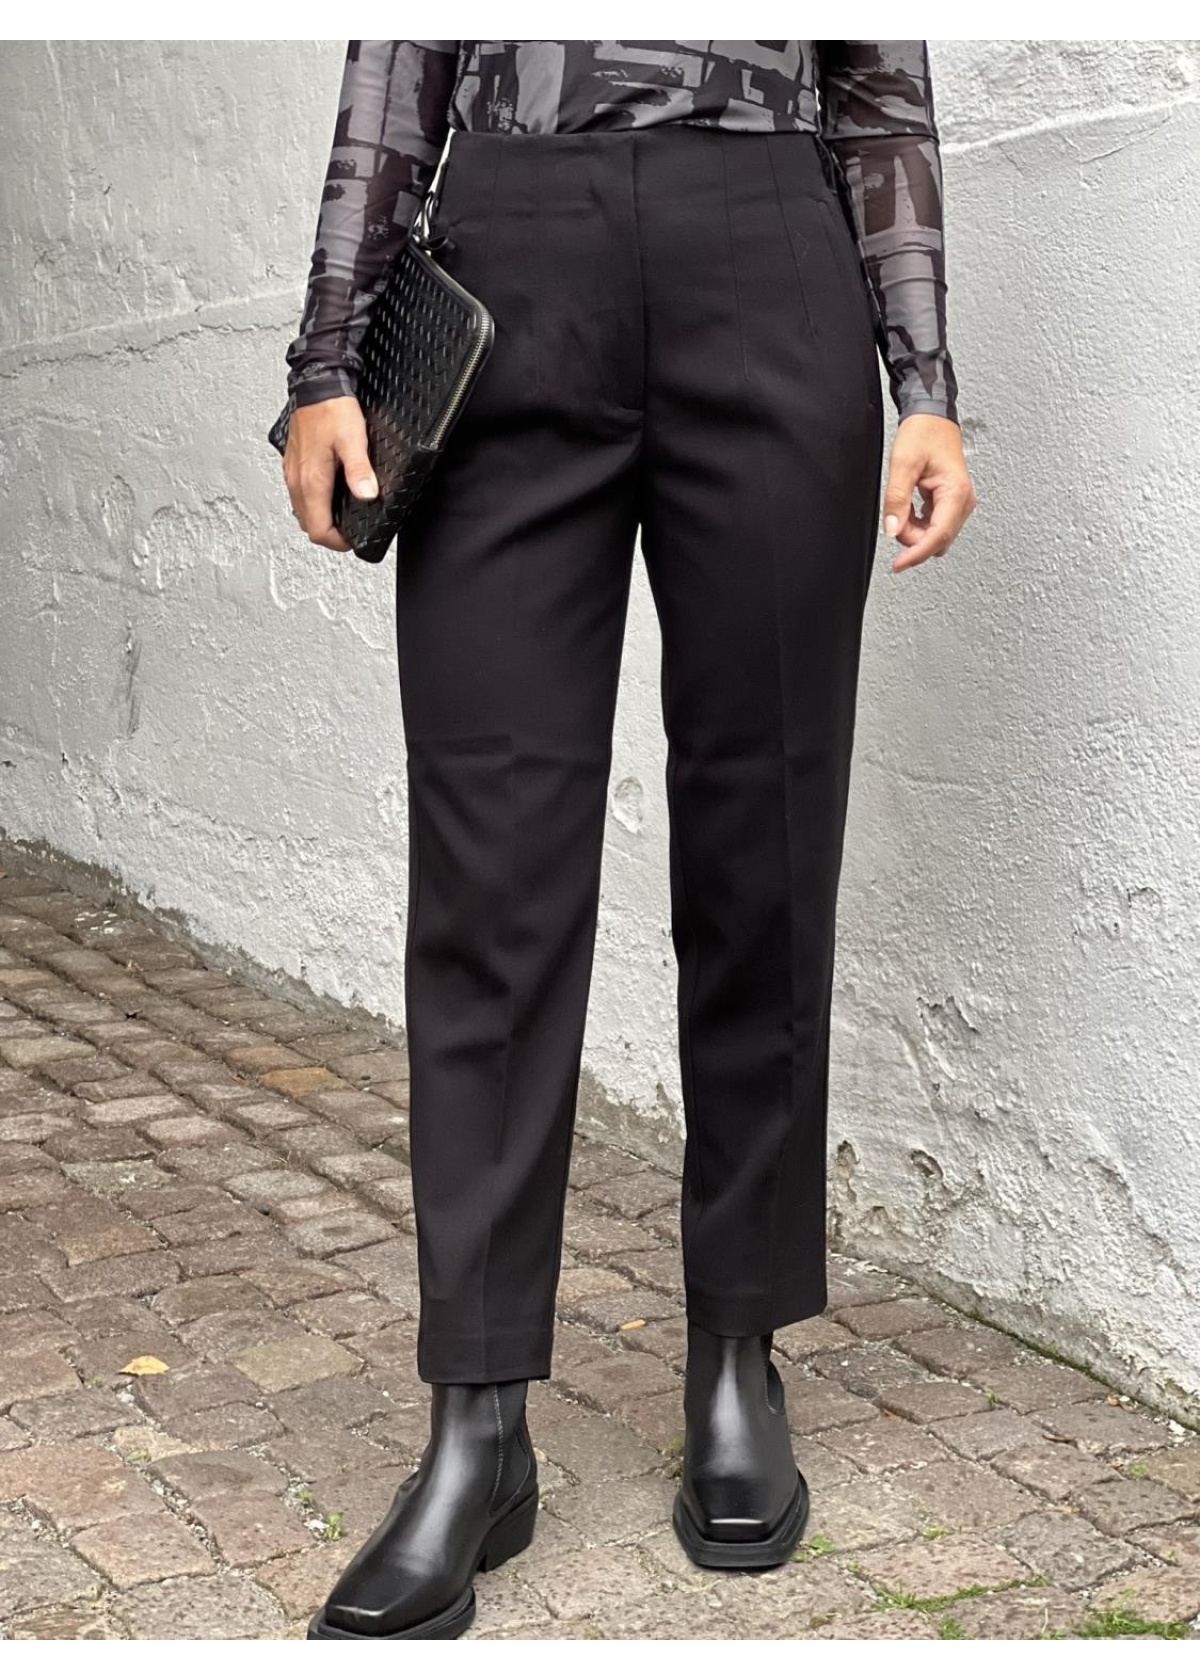 Copenhagen Muse Tailor slim pants black